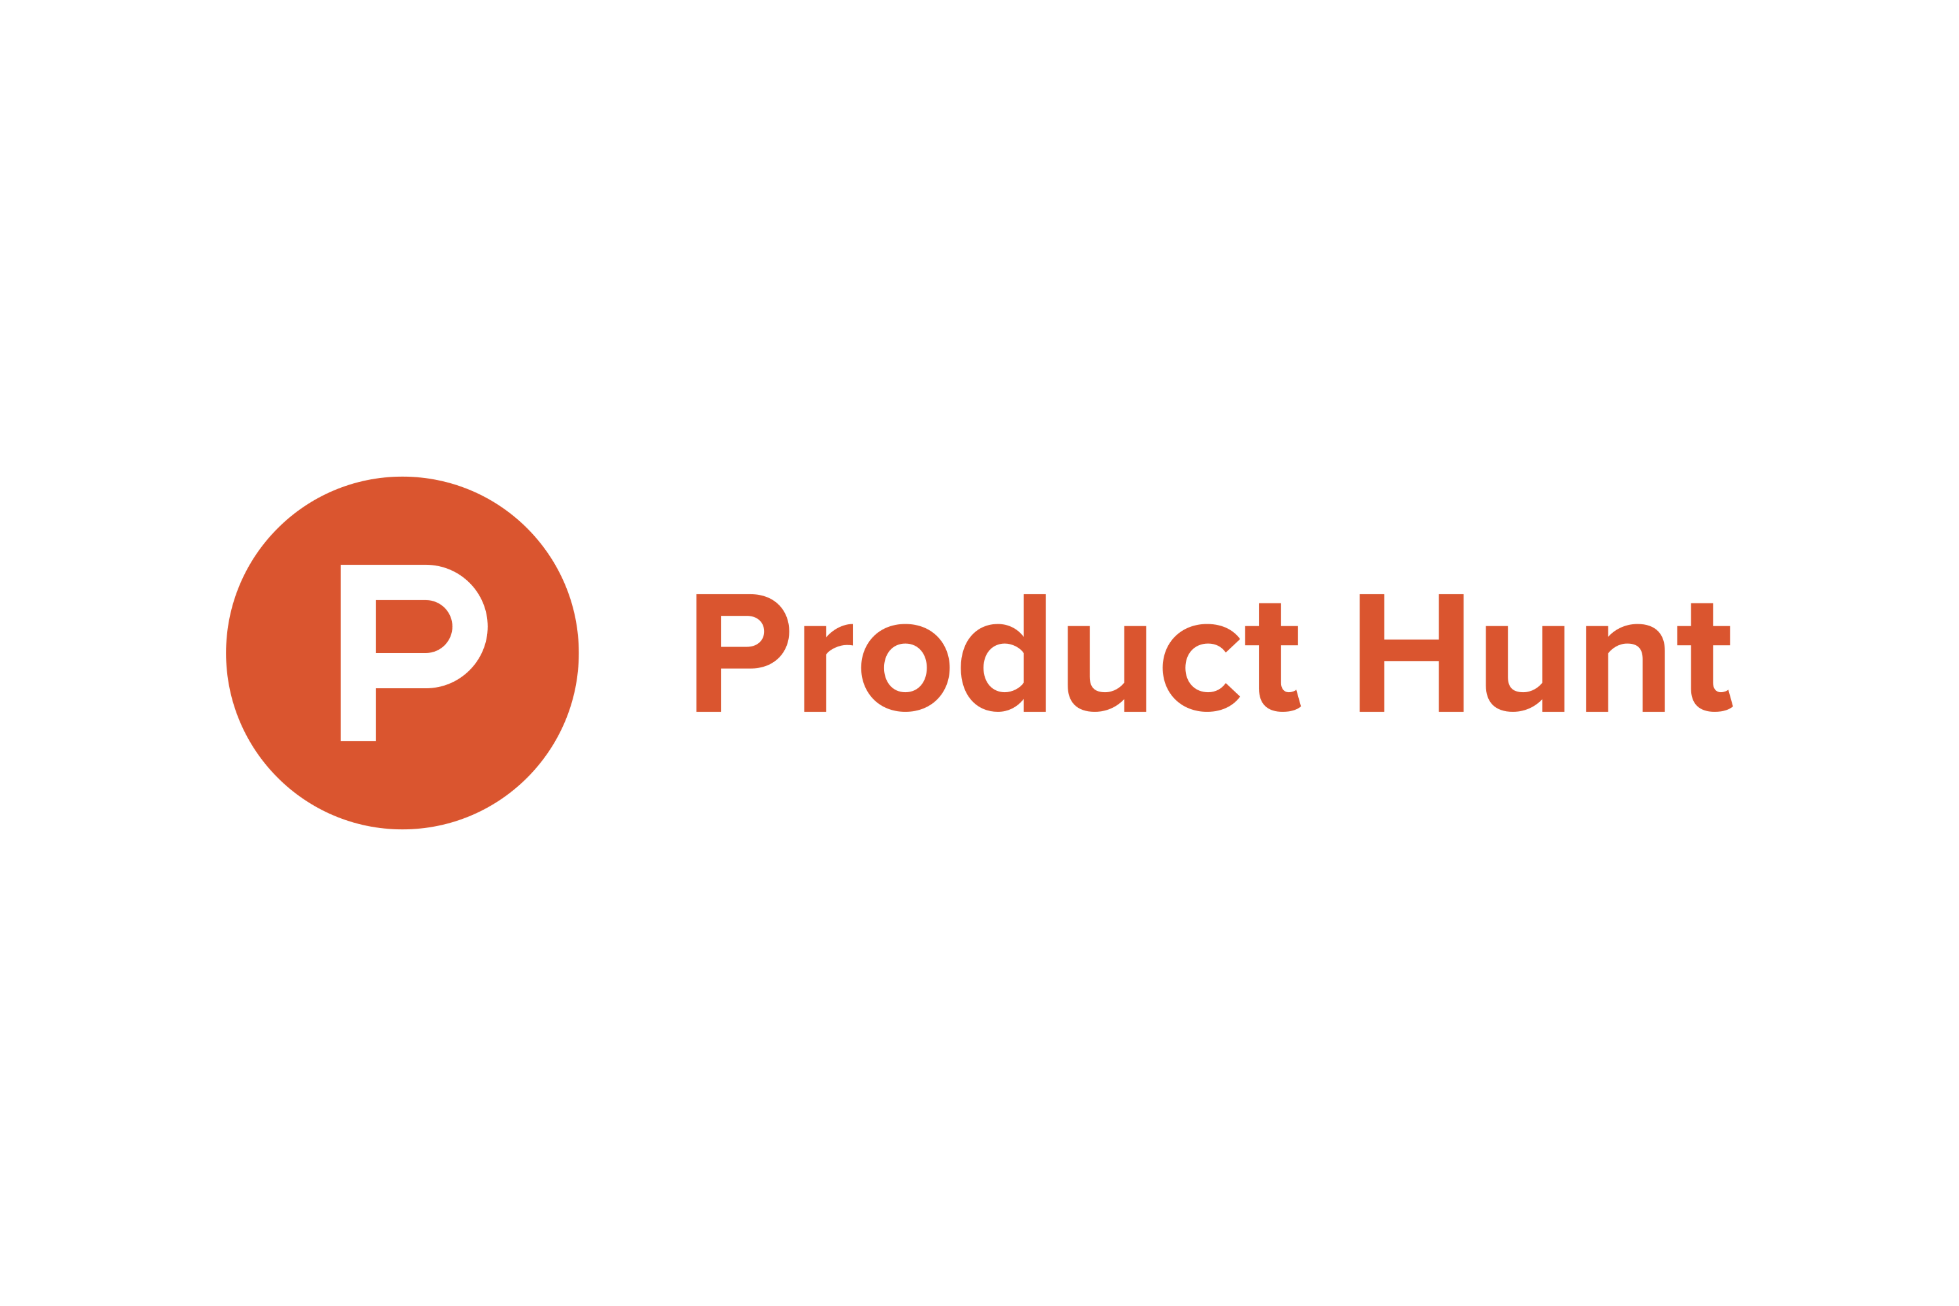 Product hunt logo.wine